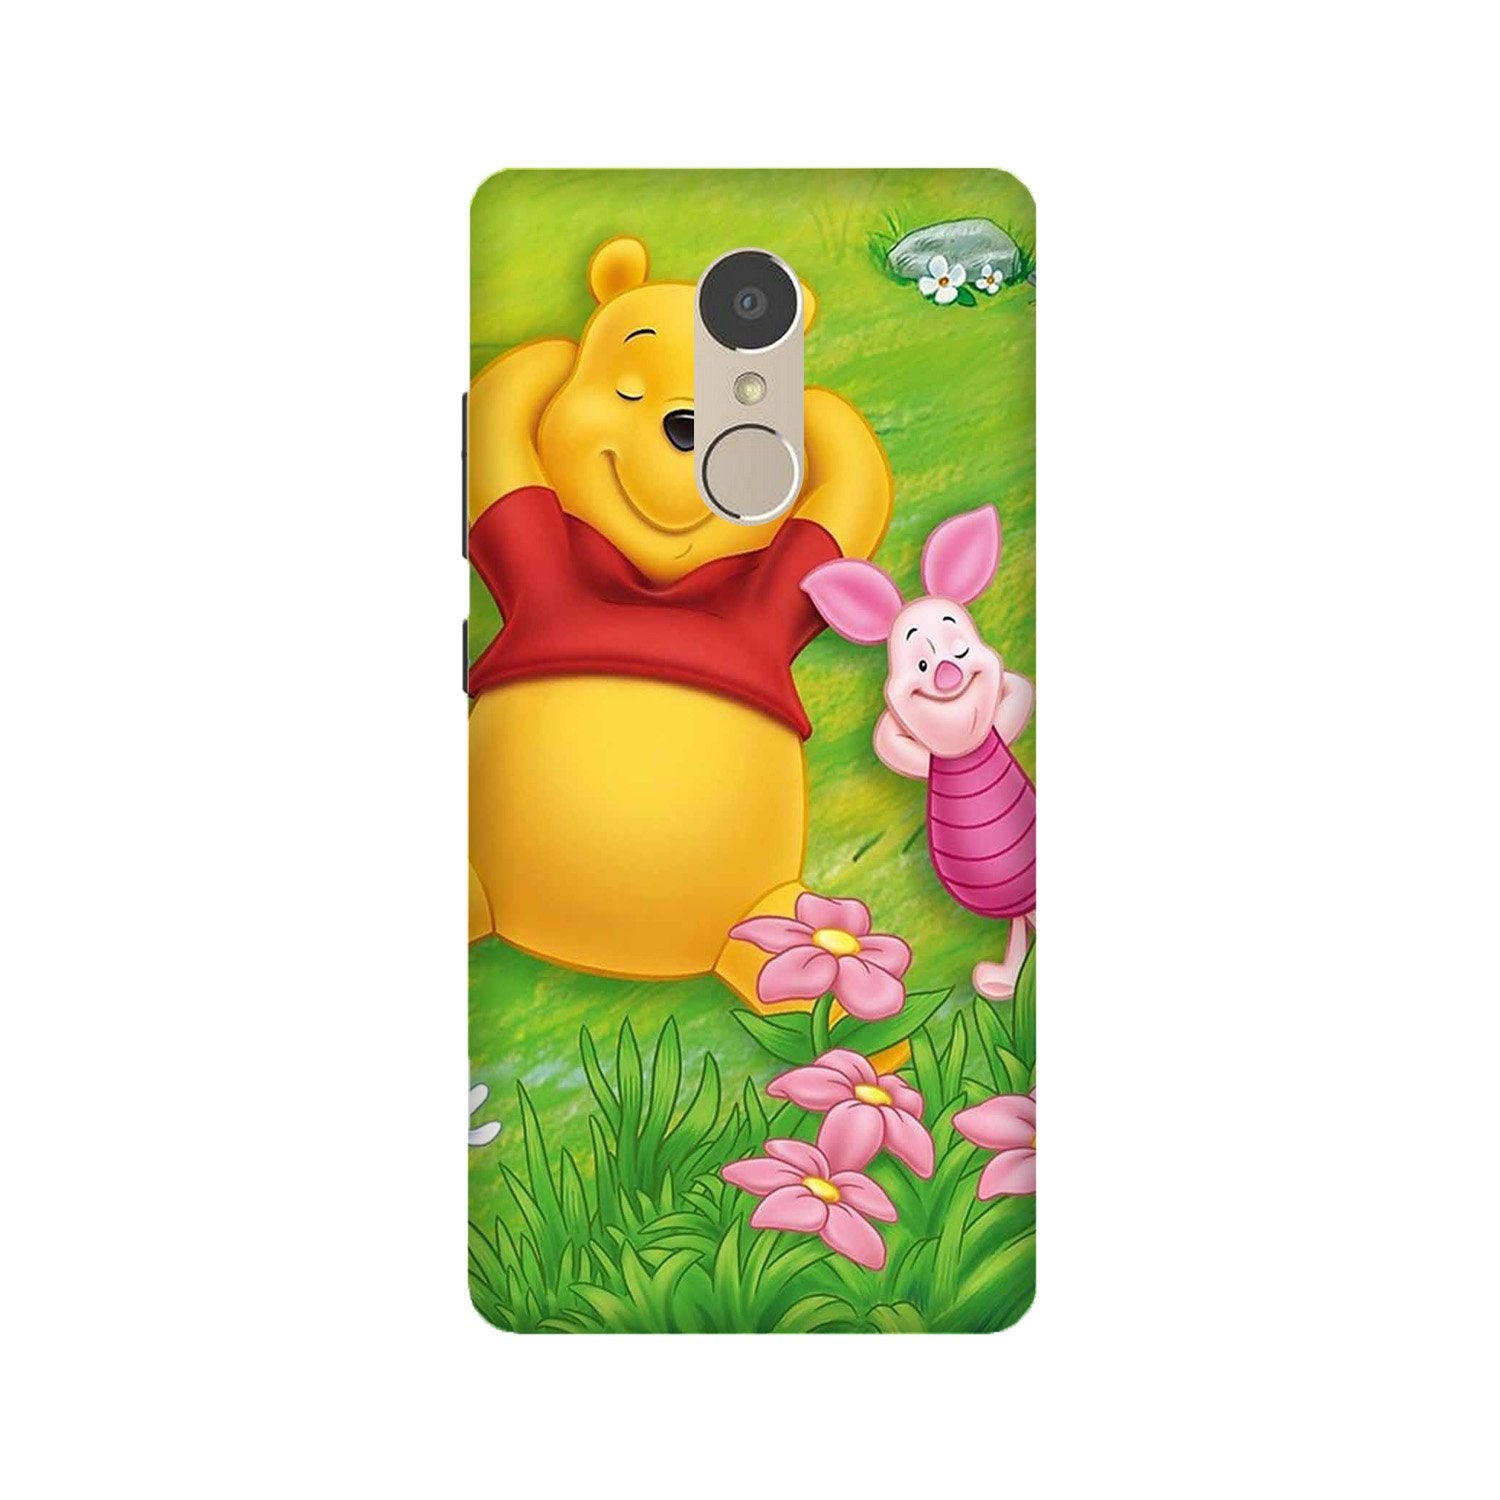 Winnie The Pooh Mobile Back Case for Lenovo K6 Note (Design - 348)